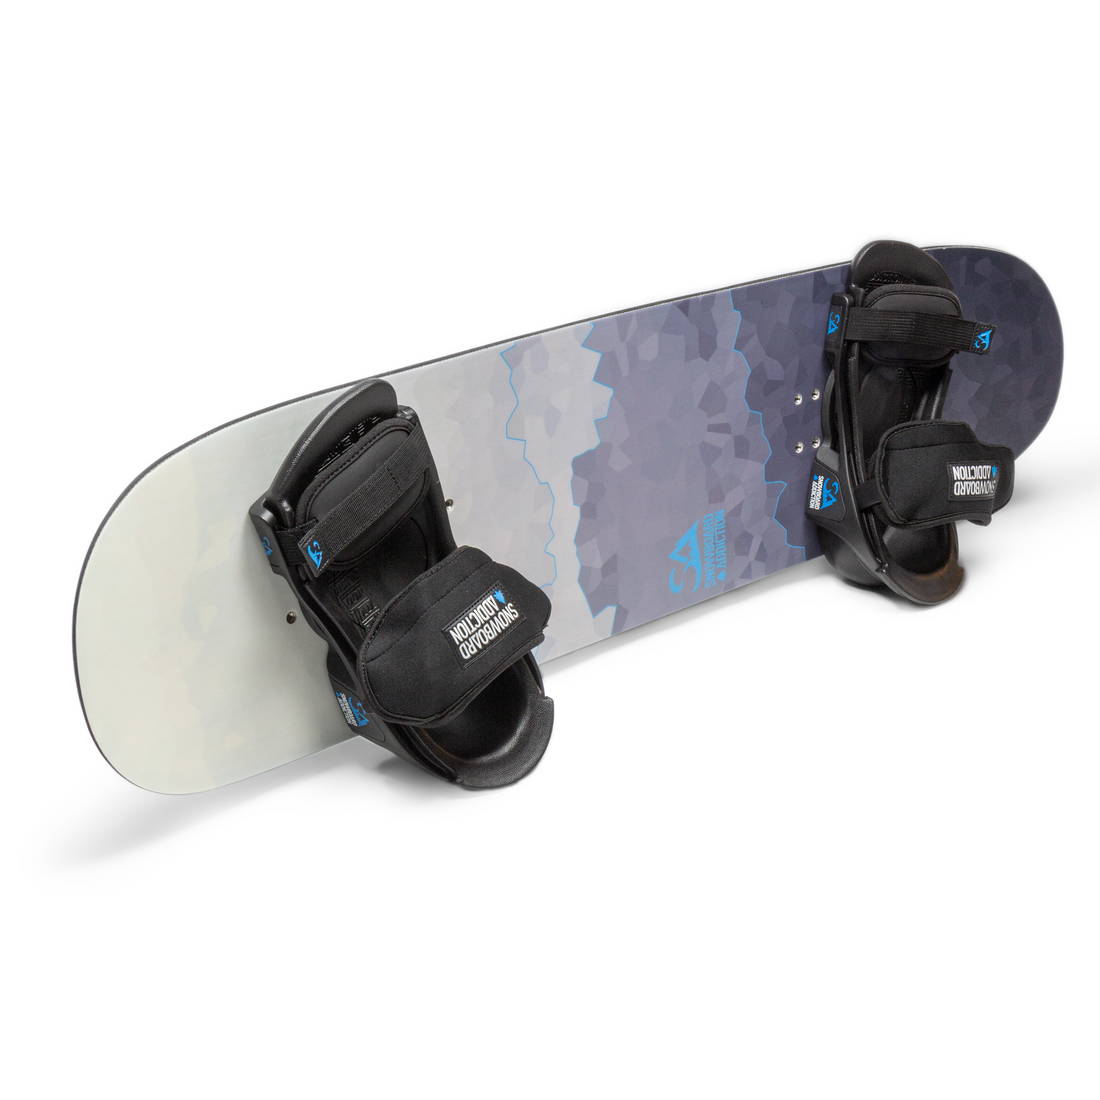 Snowboard Bindings - Snowboard Equipment - Mechanics of Snowboarding